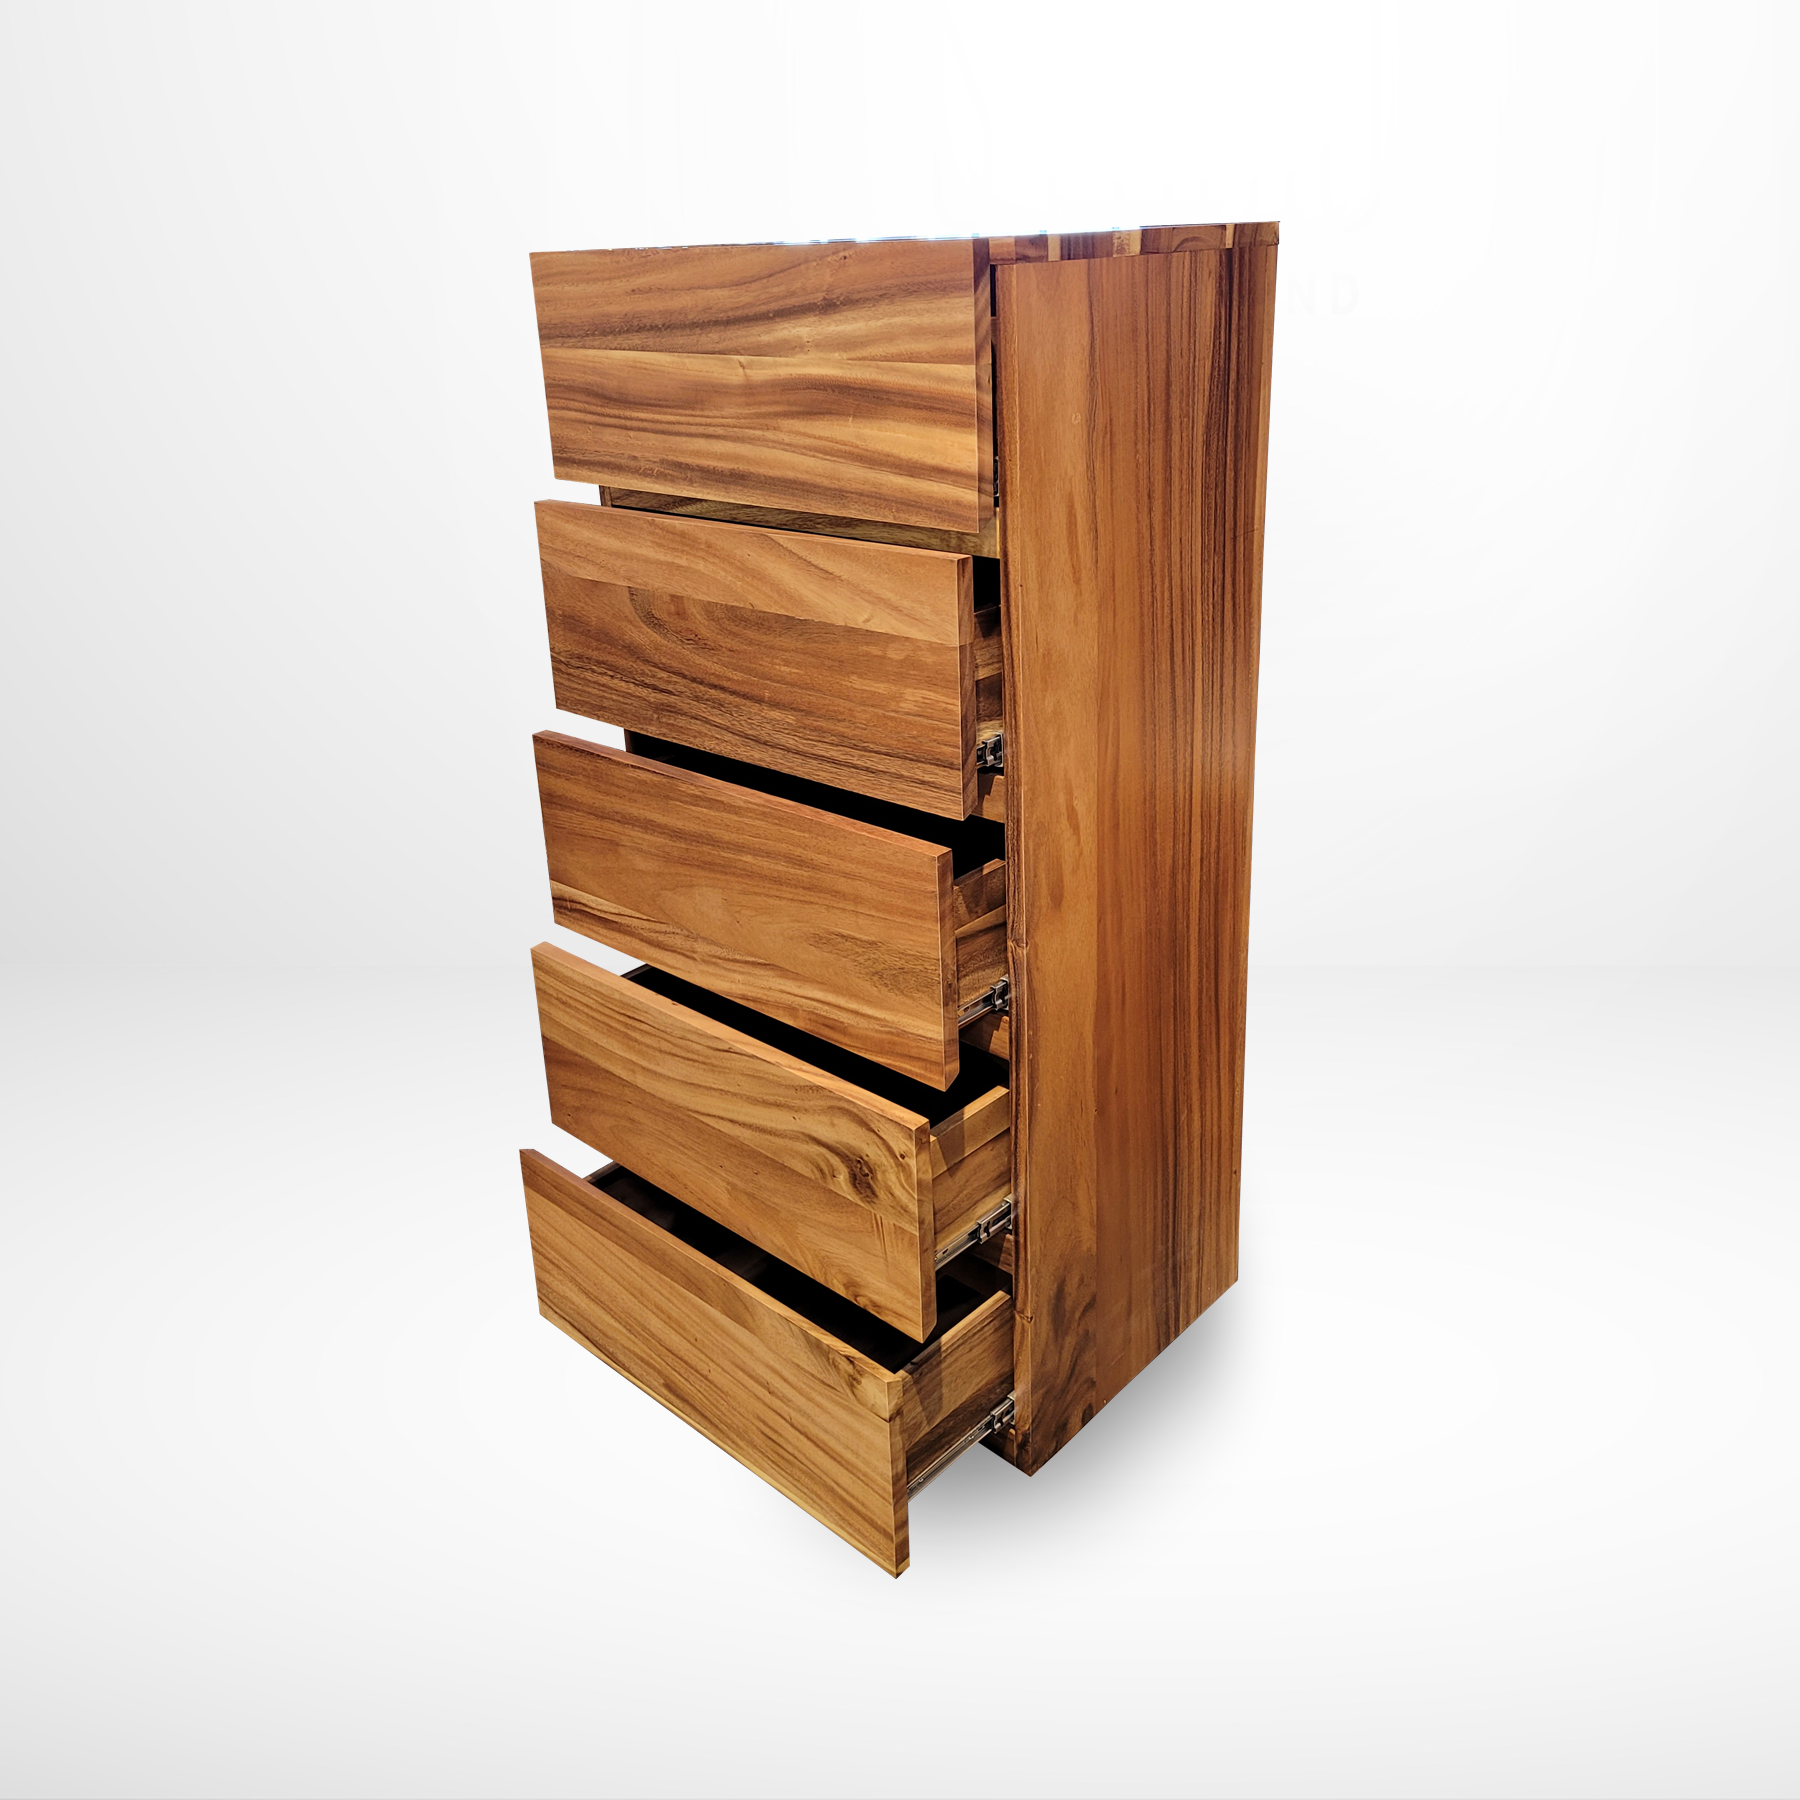 Swee dresser - 5 drawers